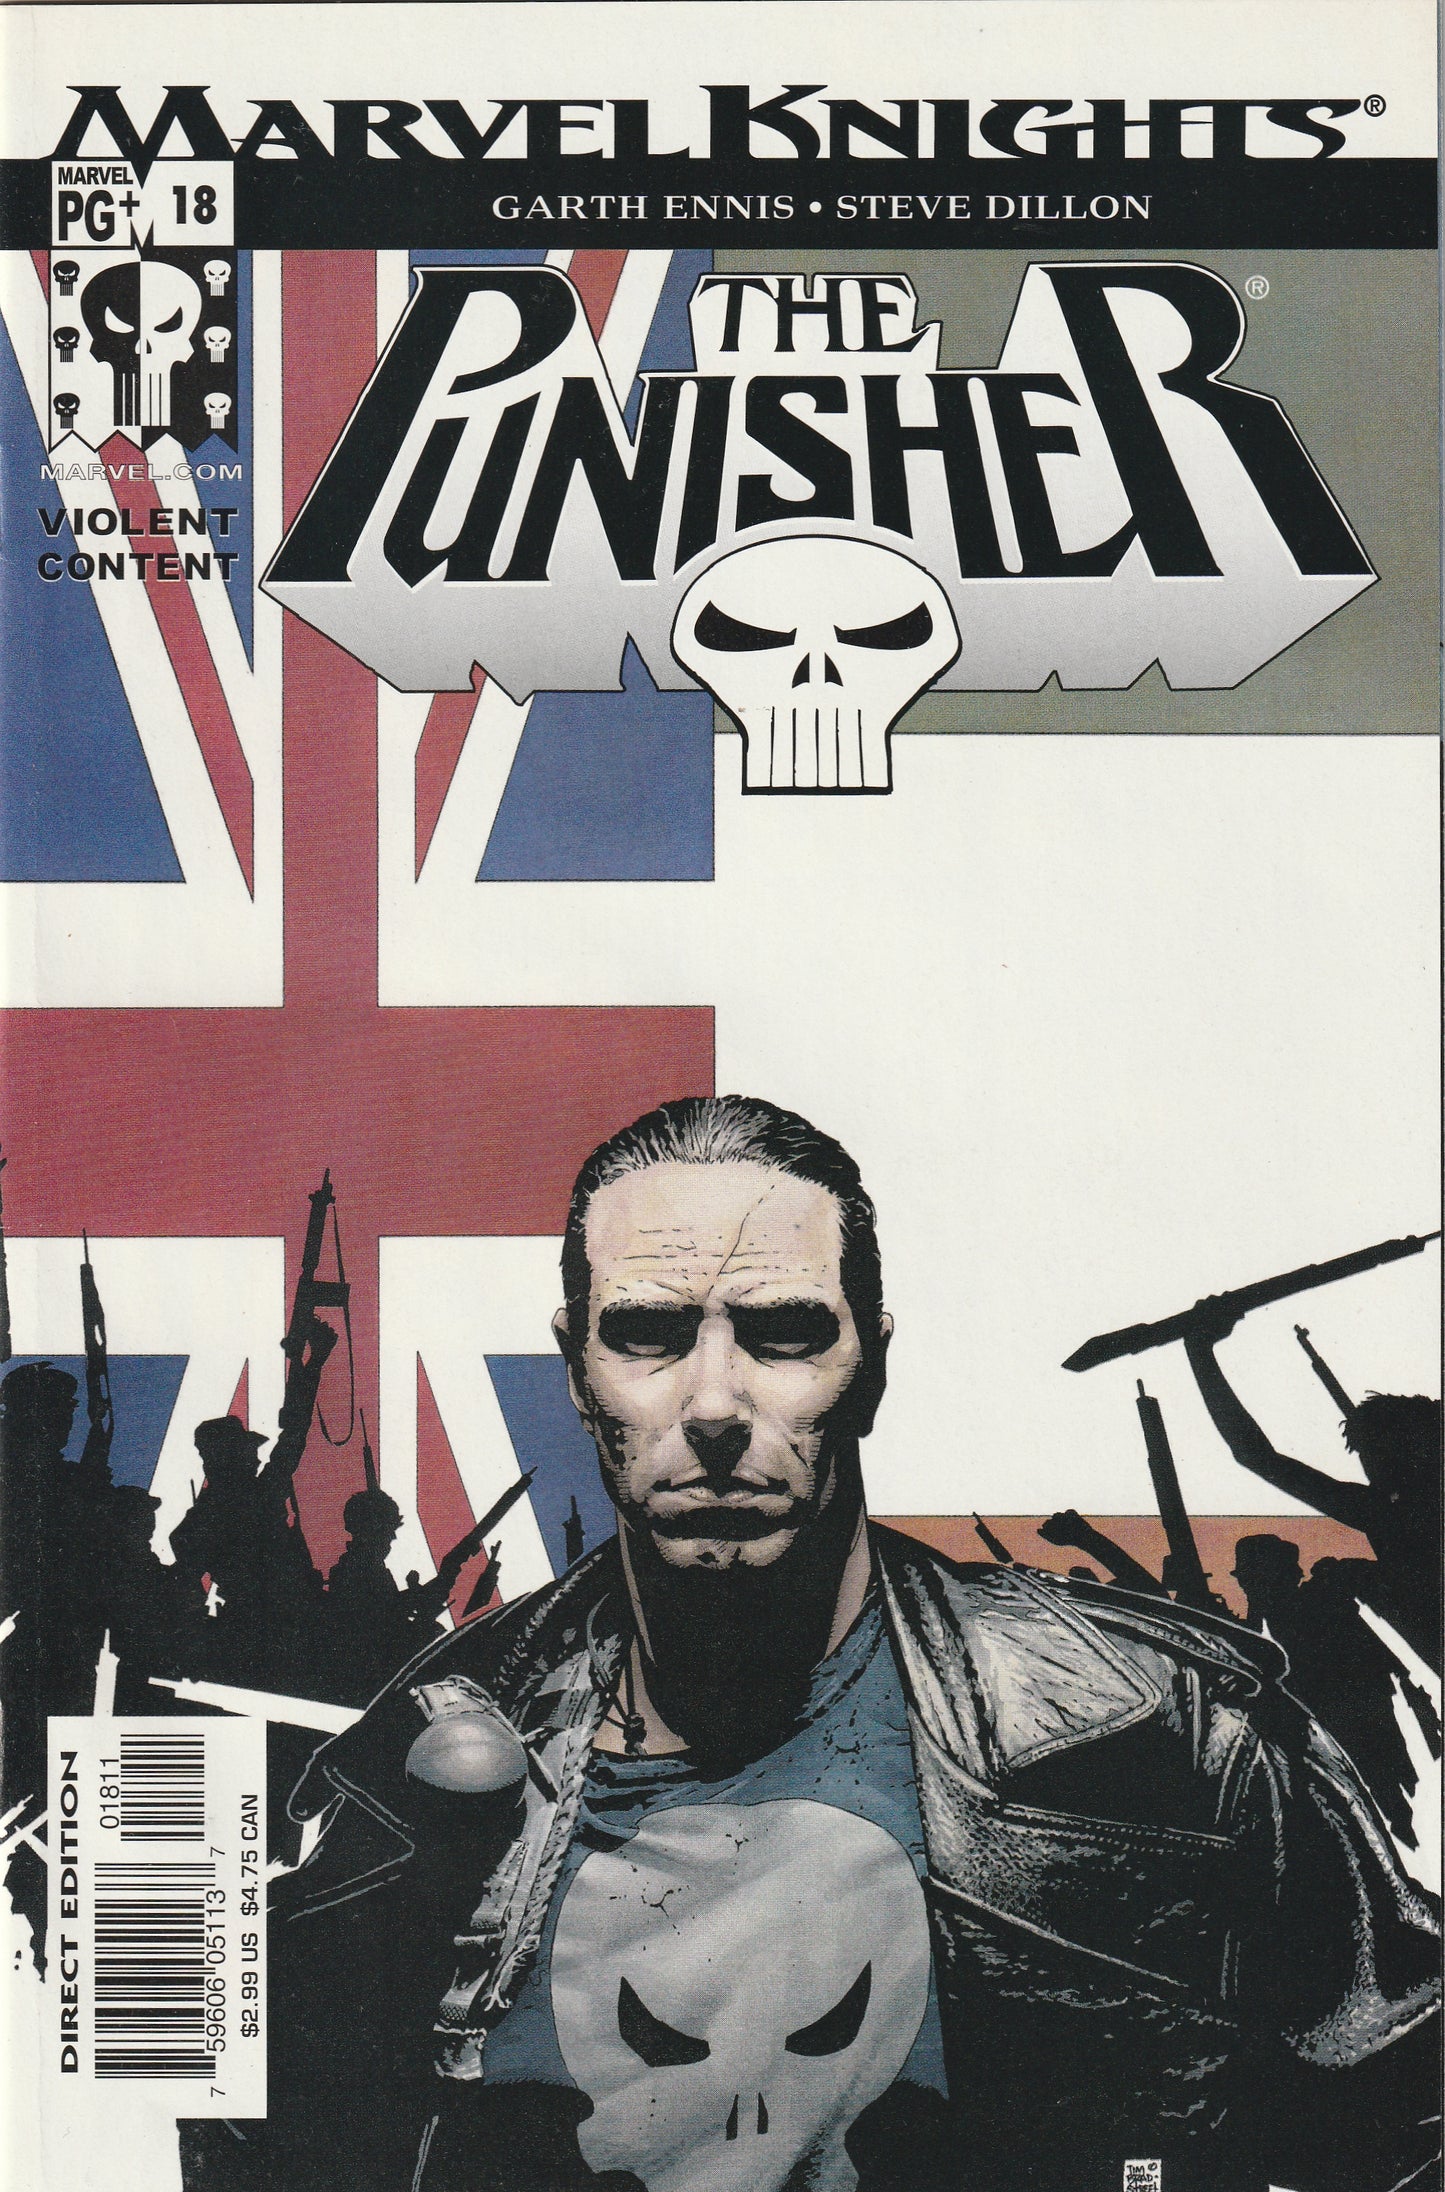 The Punisher #18 (Marvel Knights Vol 4, 2002) - Garth Ennis, Steve Dillon